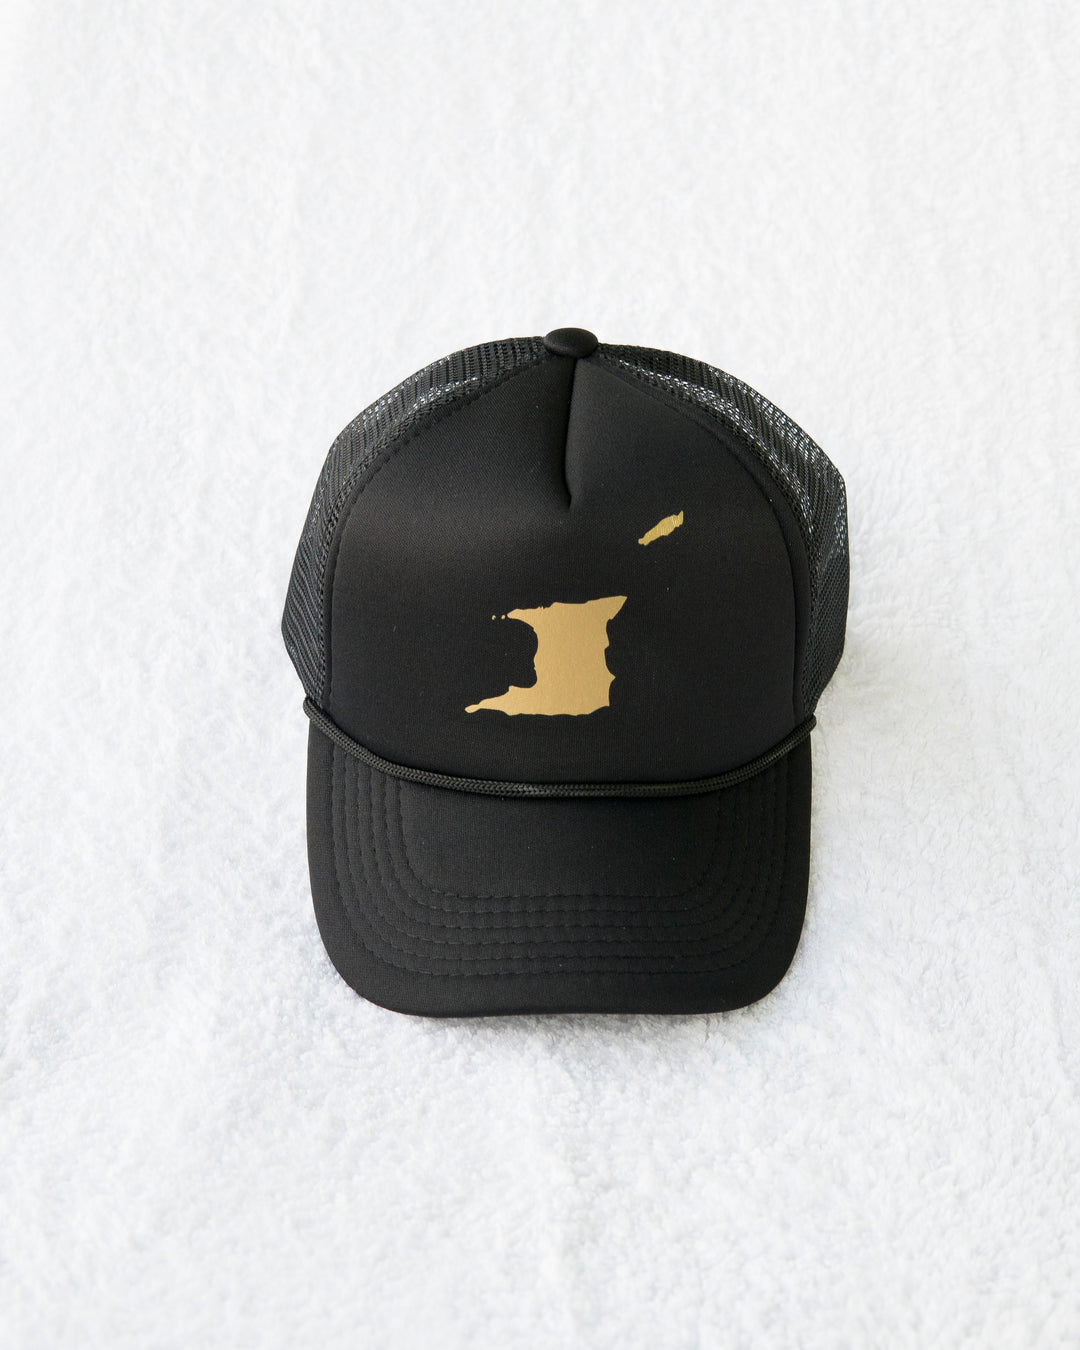 T&T GOLD TRUCKER HAT